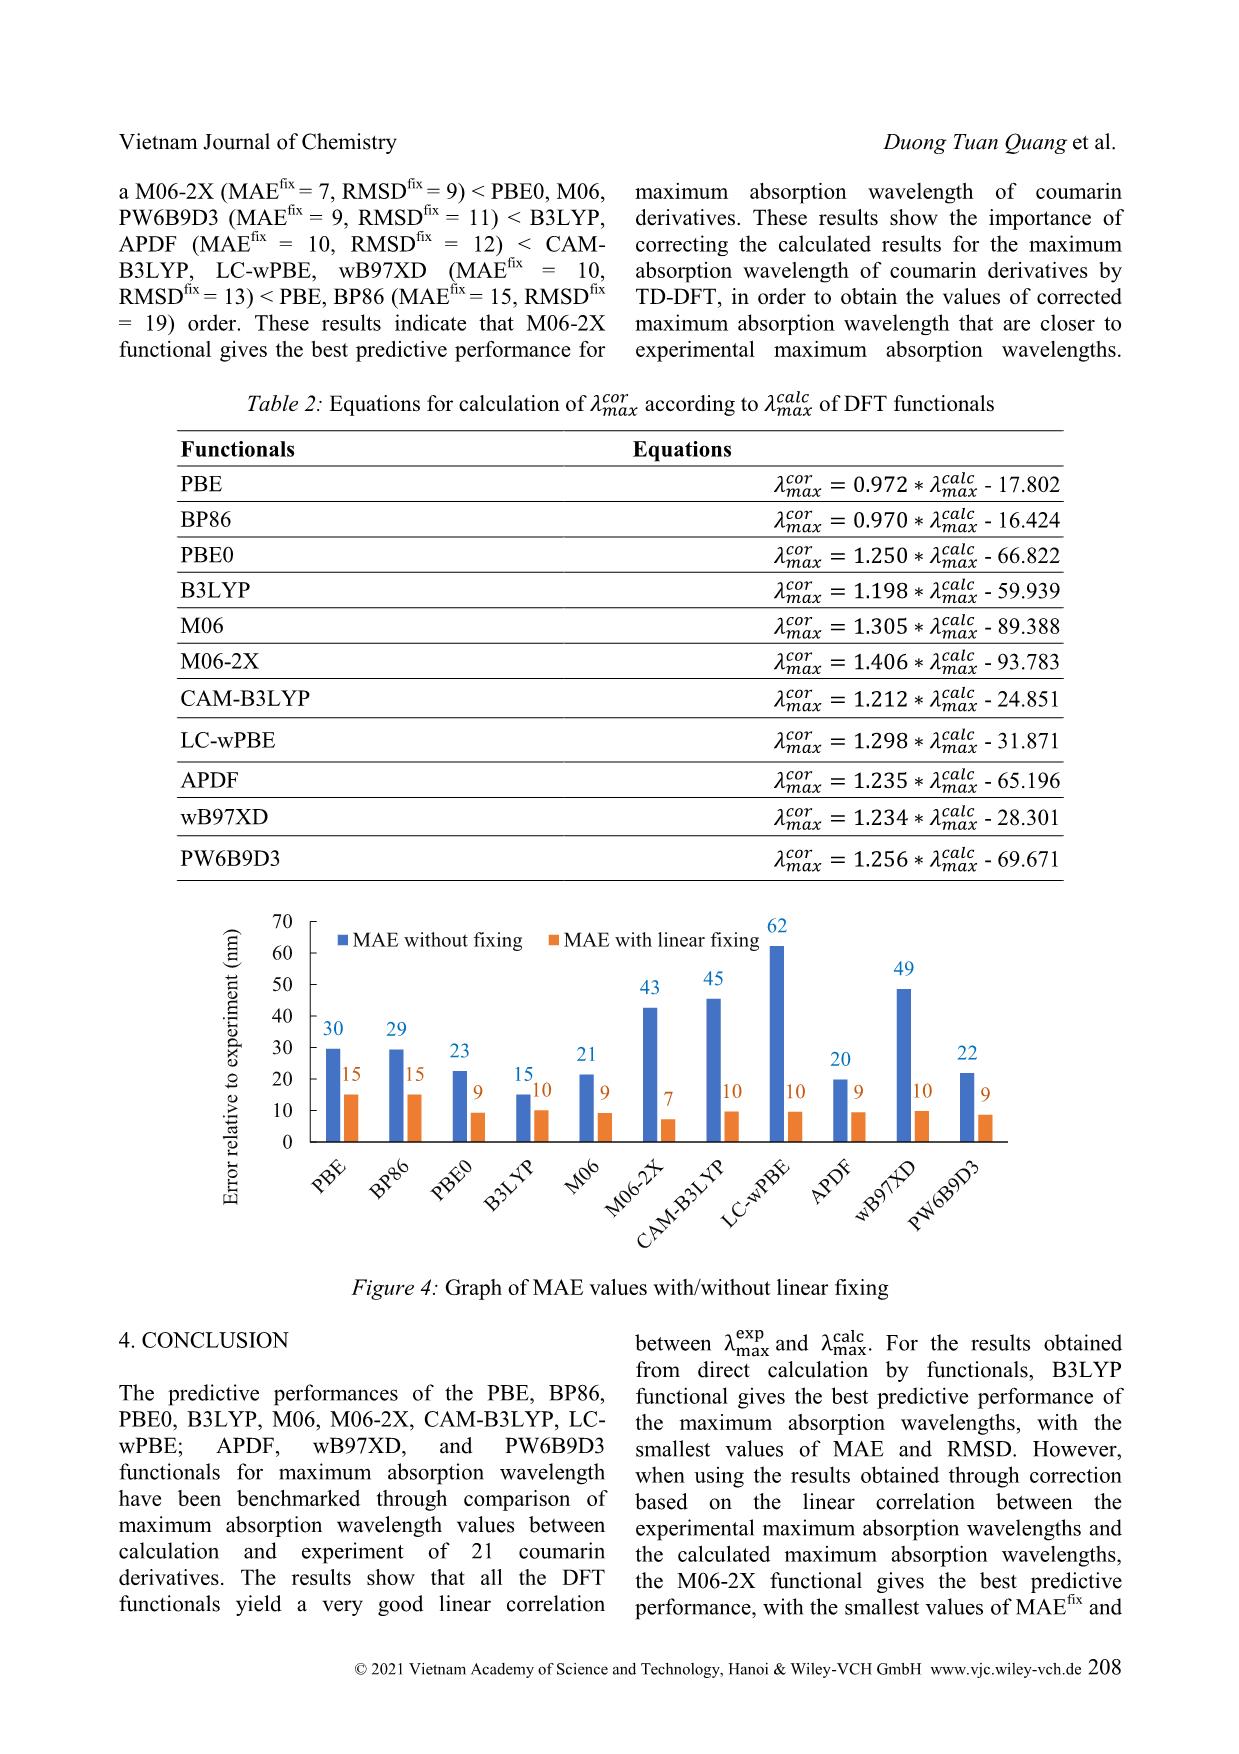 TD-DFT benchmark for UV-Vis spectra of coumarin derivatives trang 6